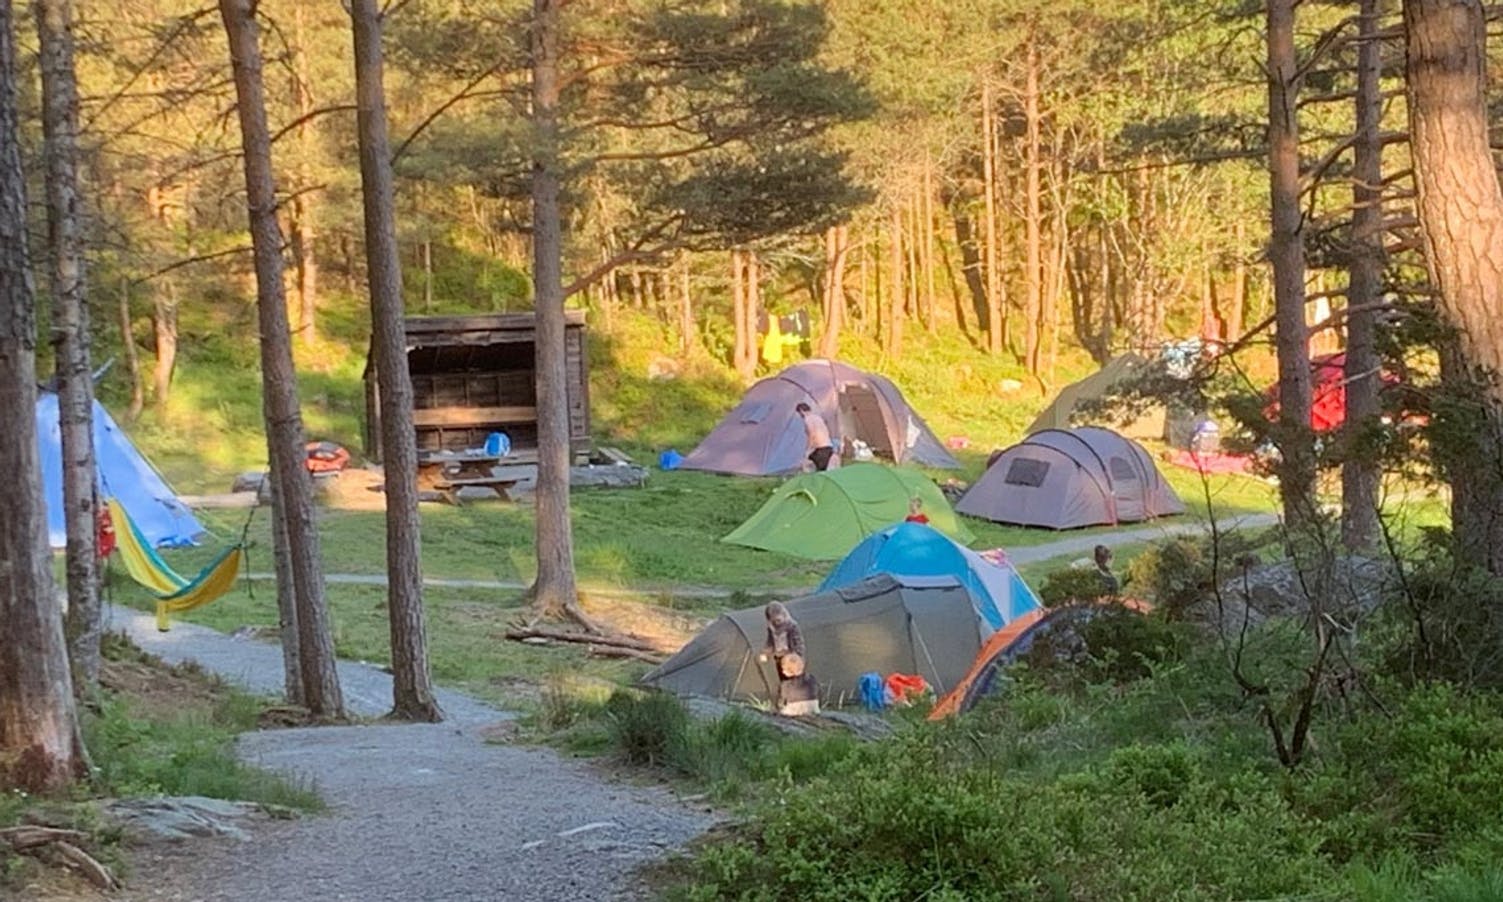 Ervikane blei forvandla til ein campingplass